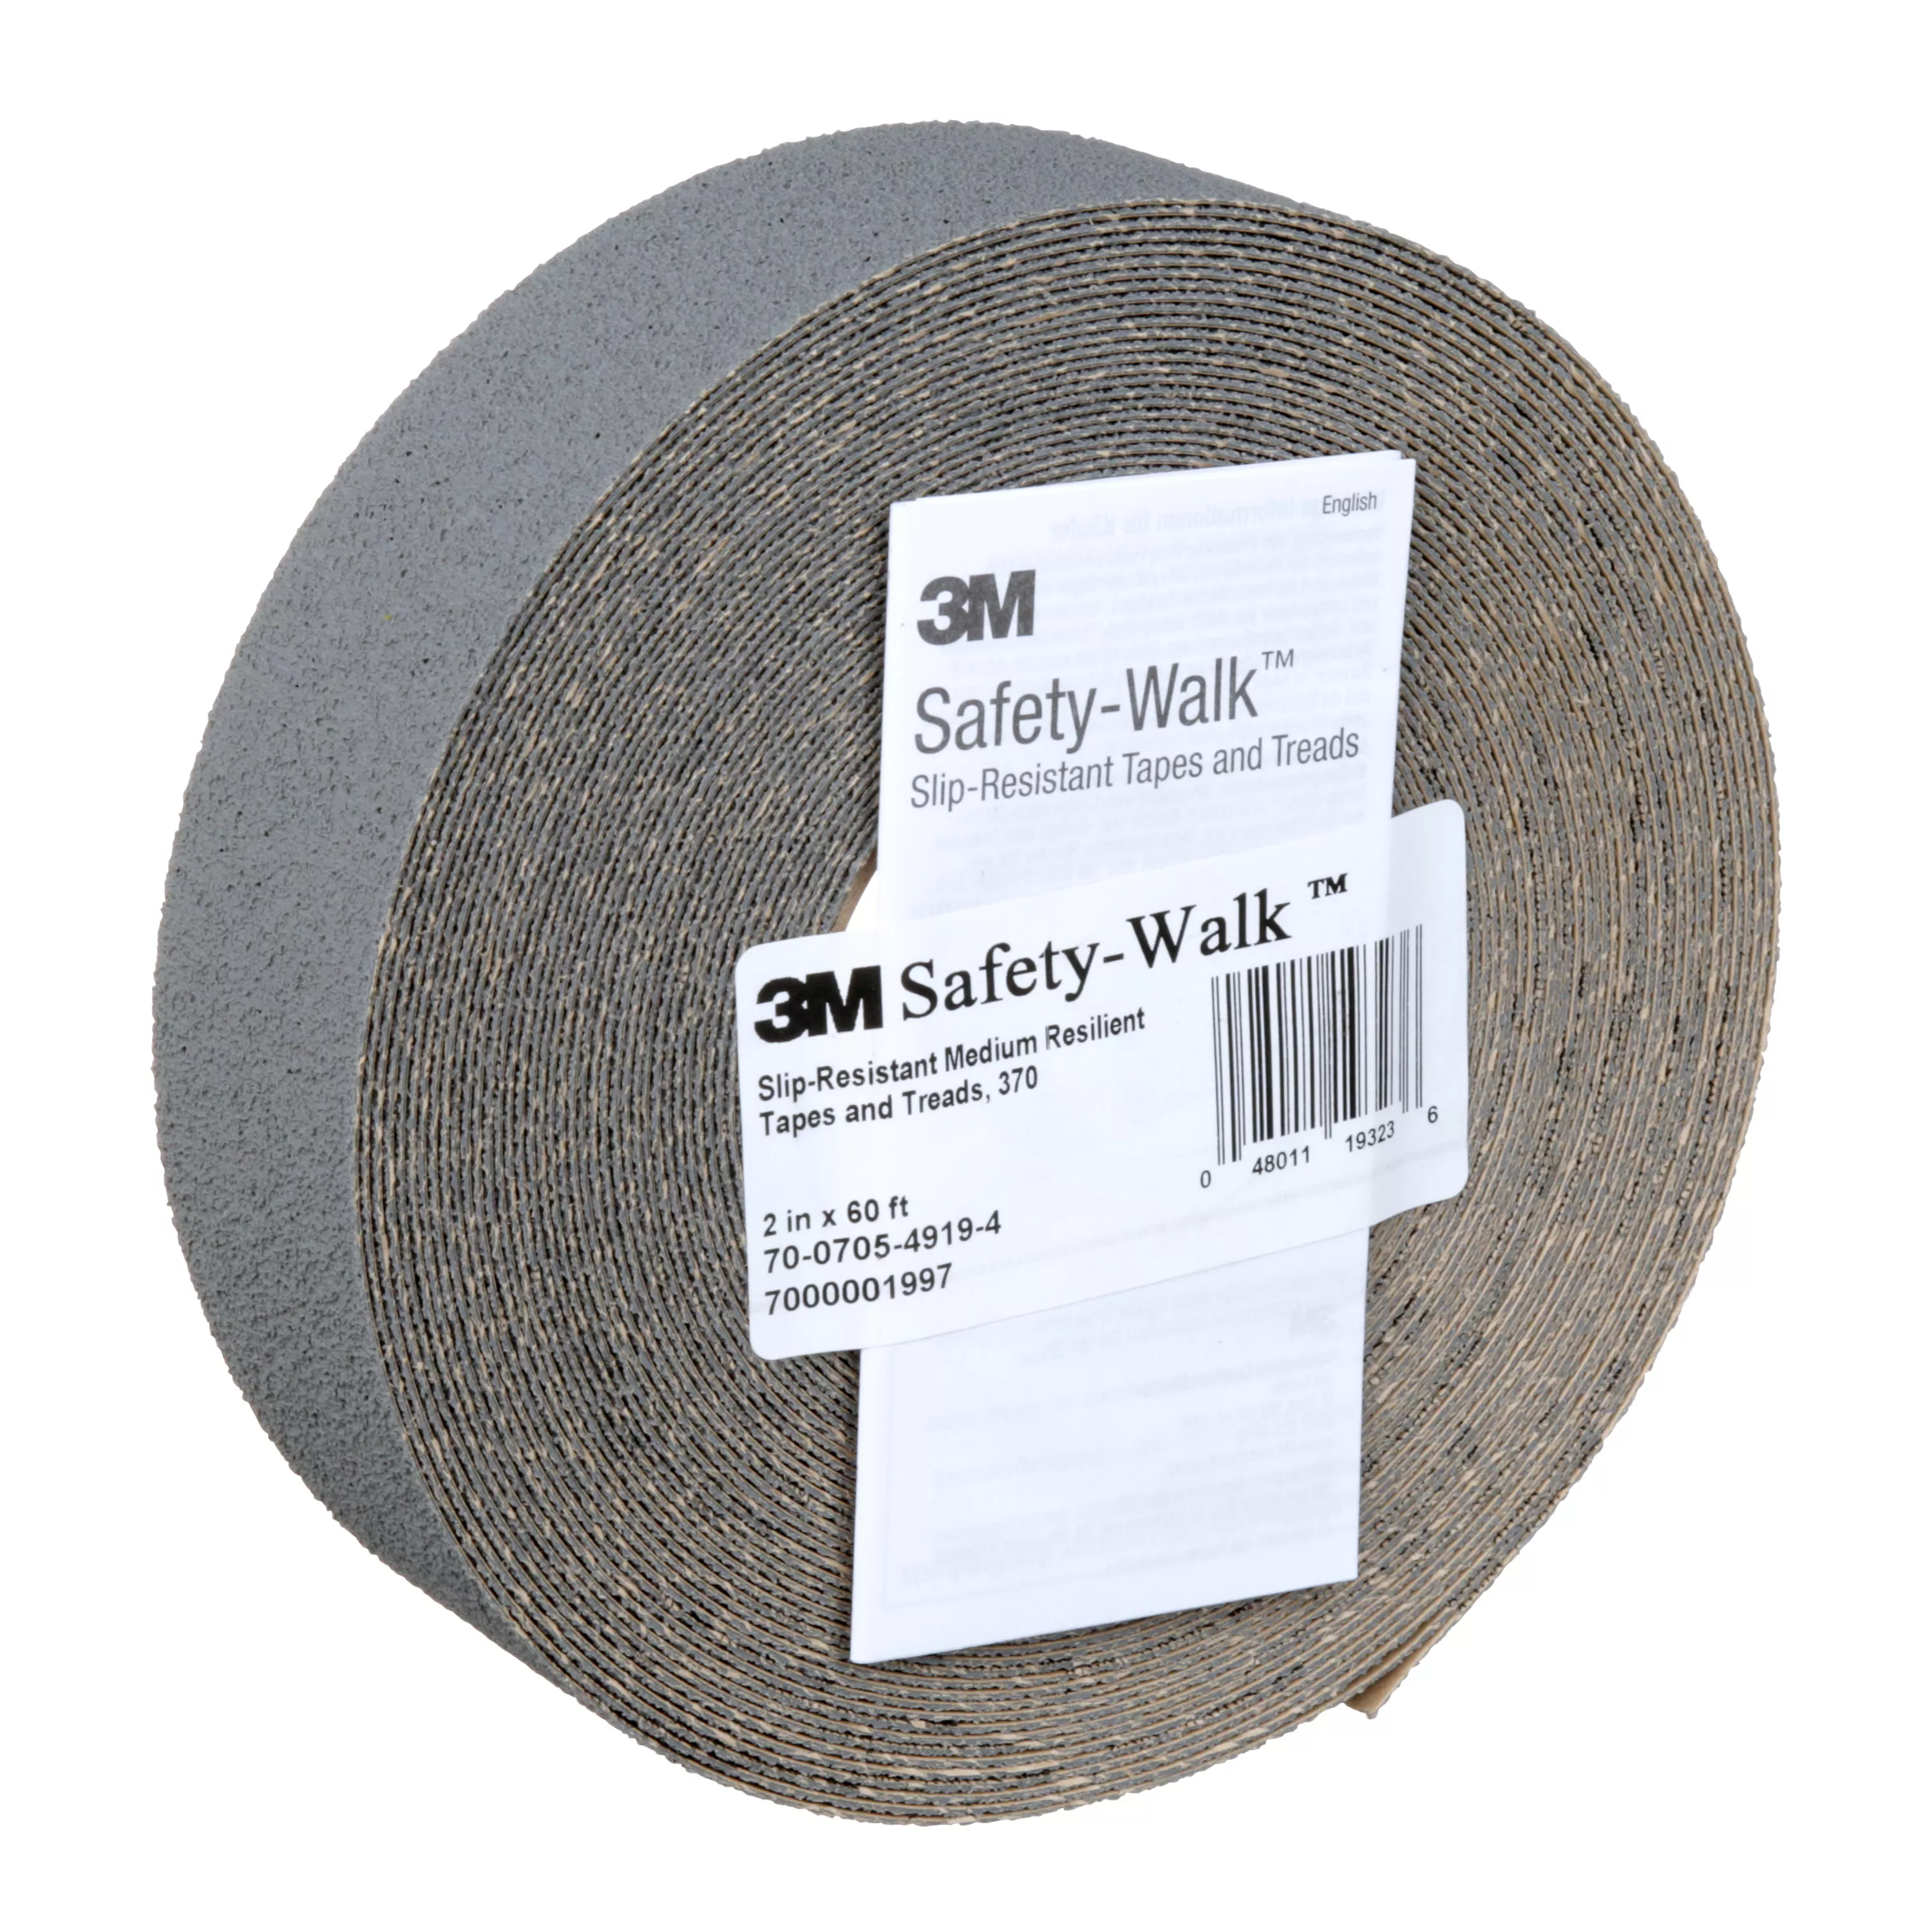 SKU 7000001997 | 3M™ Safety-Walk™ Slip-Resistant Medium Resilient Tapes & Treads 370